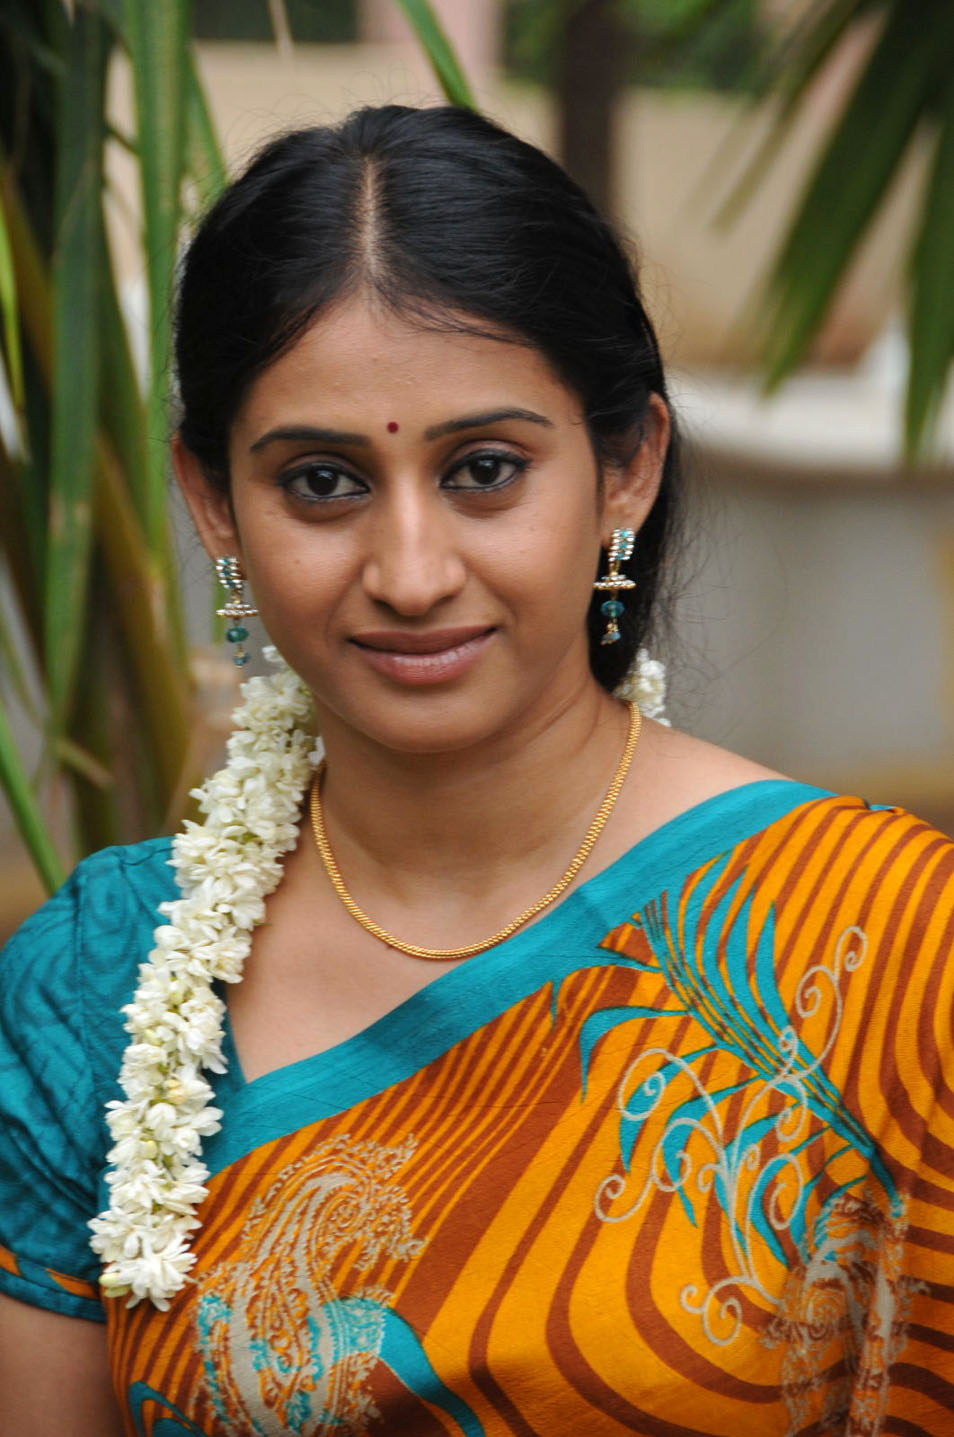 Actress Meena Kumari Latest PhotoShoot Pics - TeluguCinemas.in Telugucinema  Tollywood Cinemas Telugucinemas.in Telugu Updates Cinema news latest c